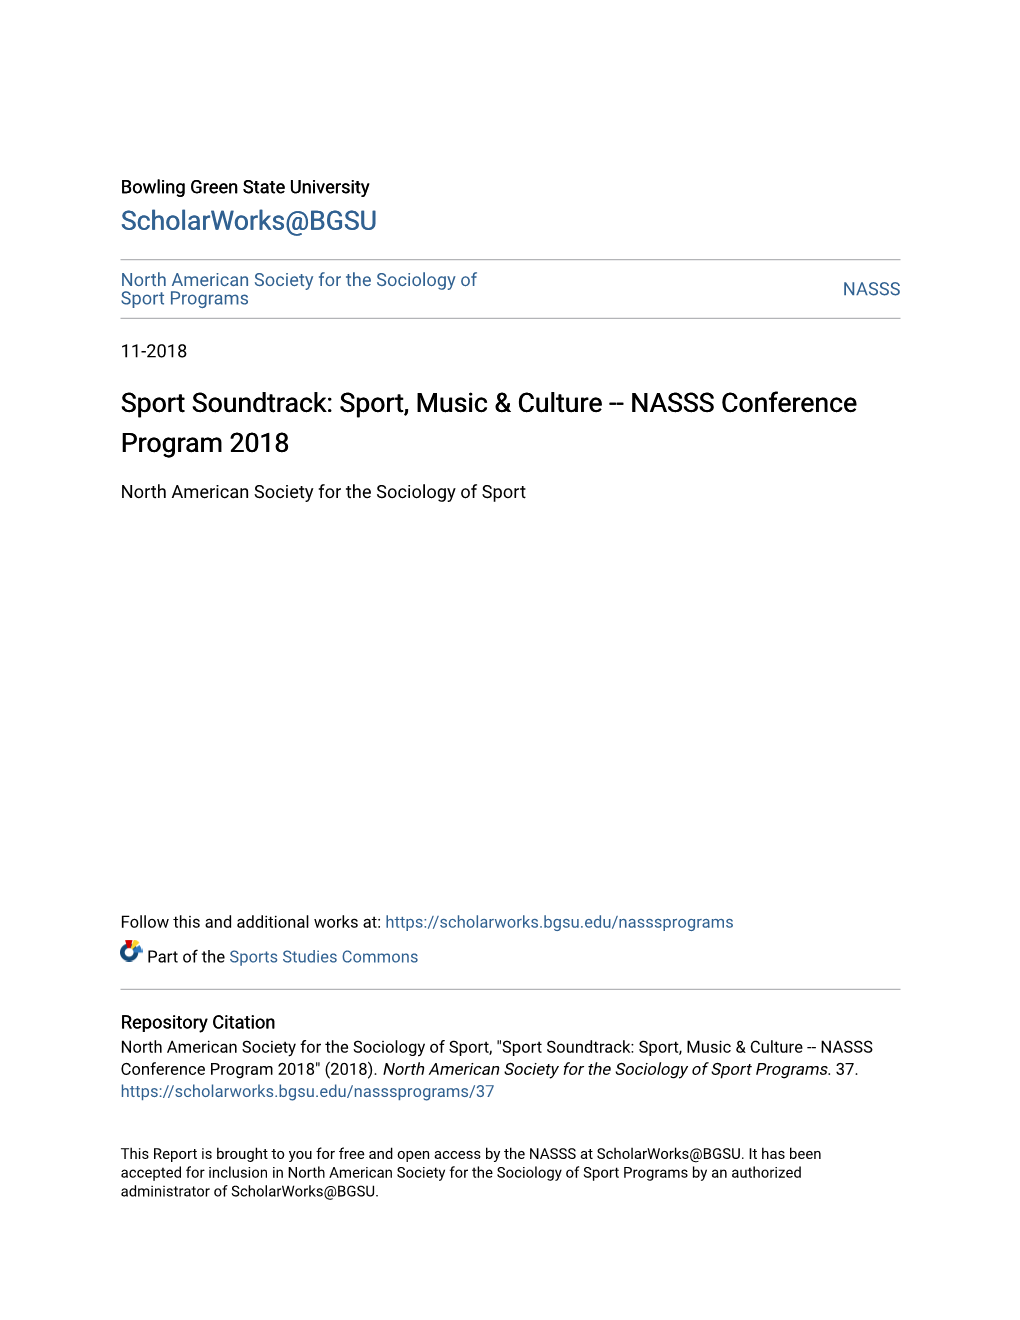 Sport Soundtrack: Sport, Music & Culture -- NASSS Conference